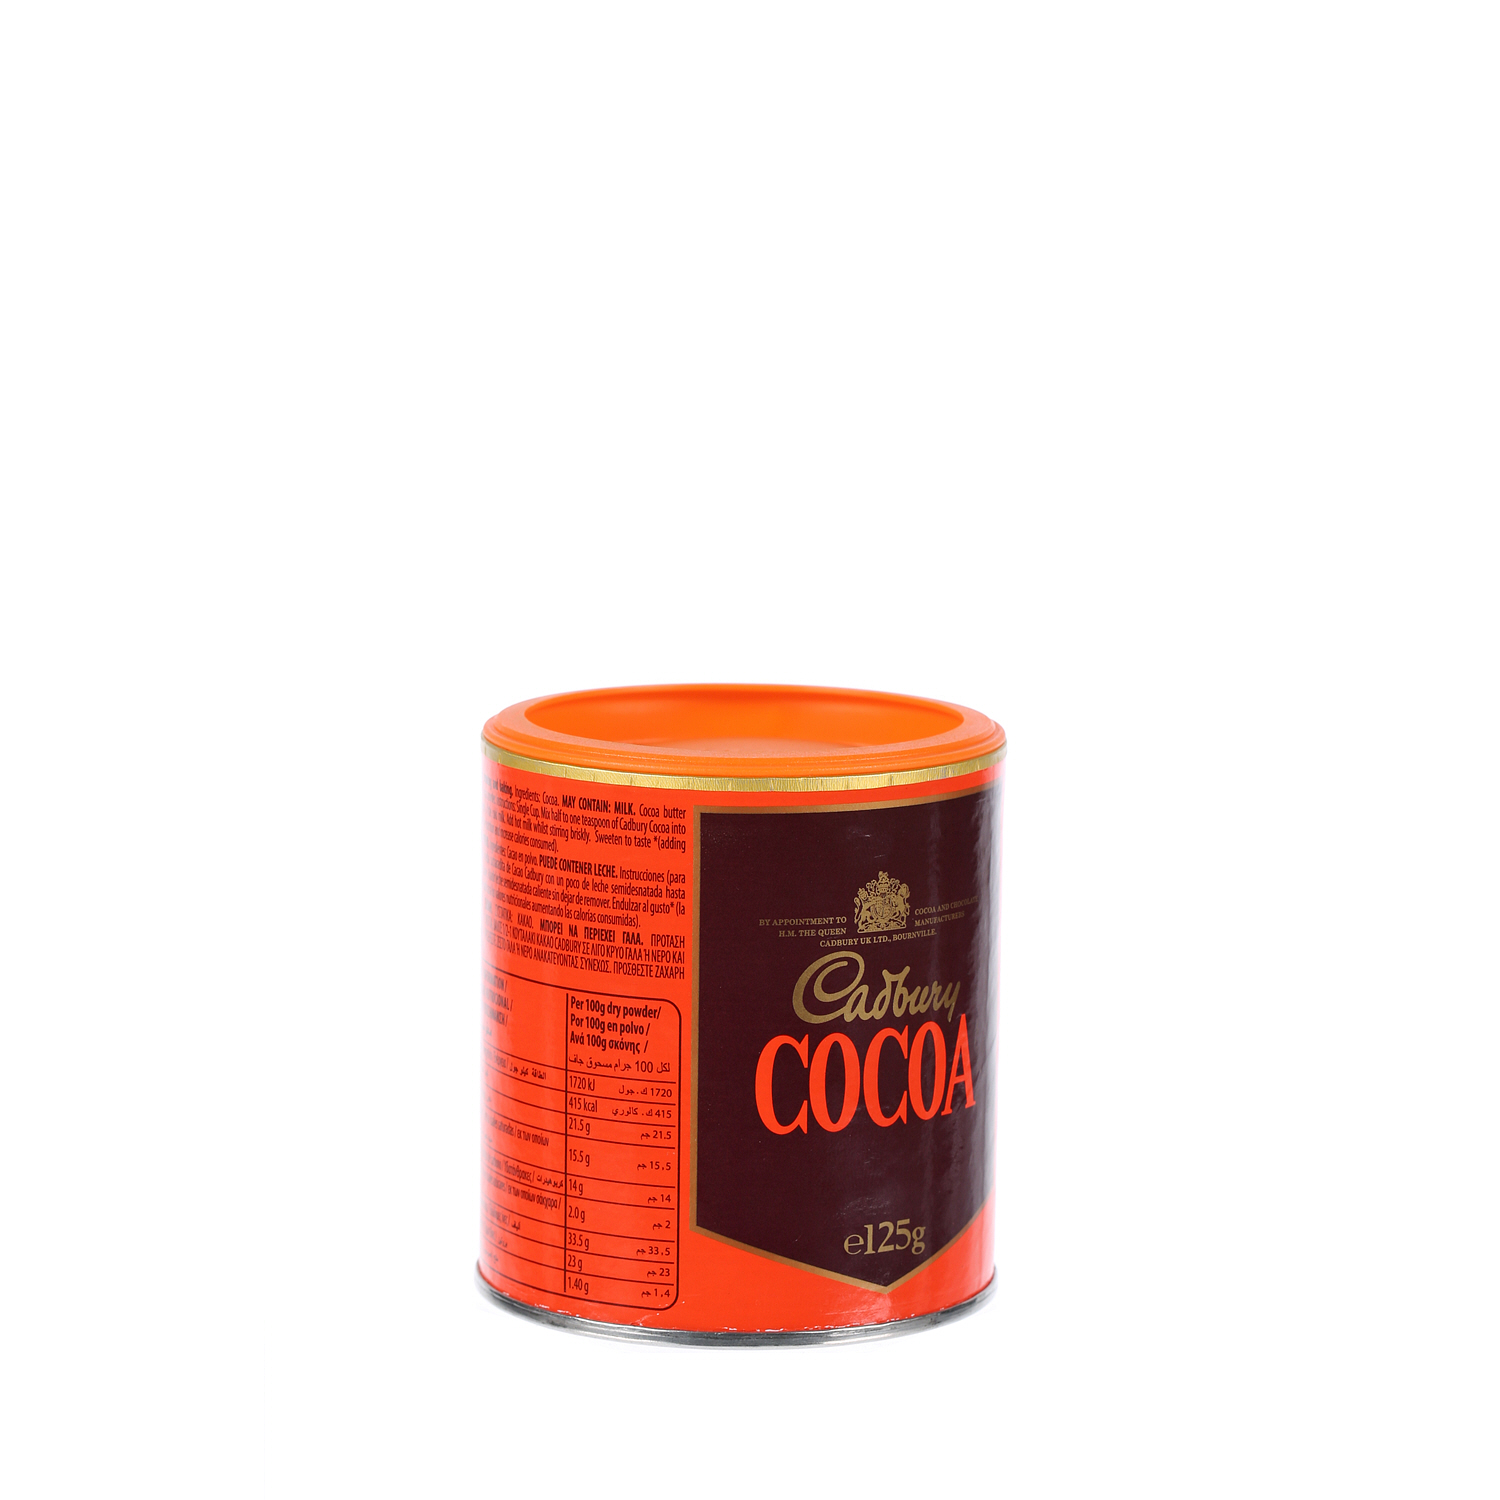 Cadbury Cocoa Powder 125 g